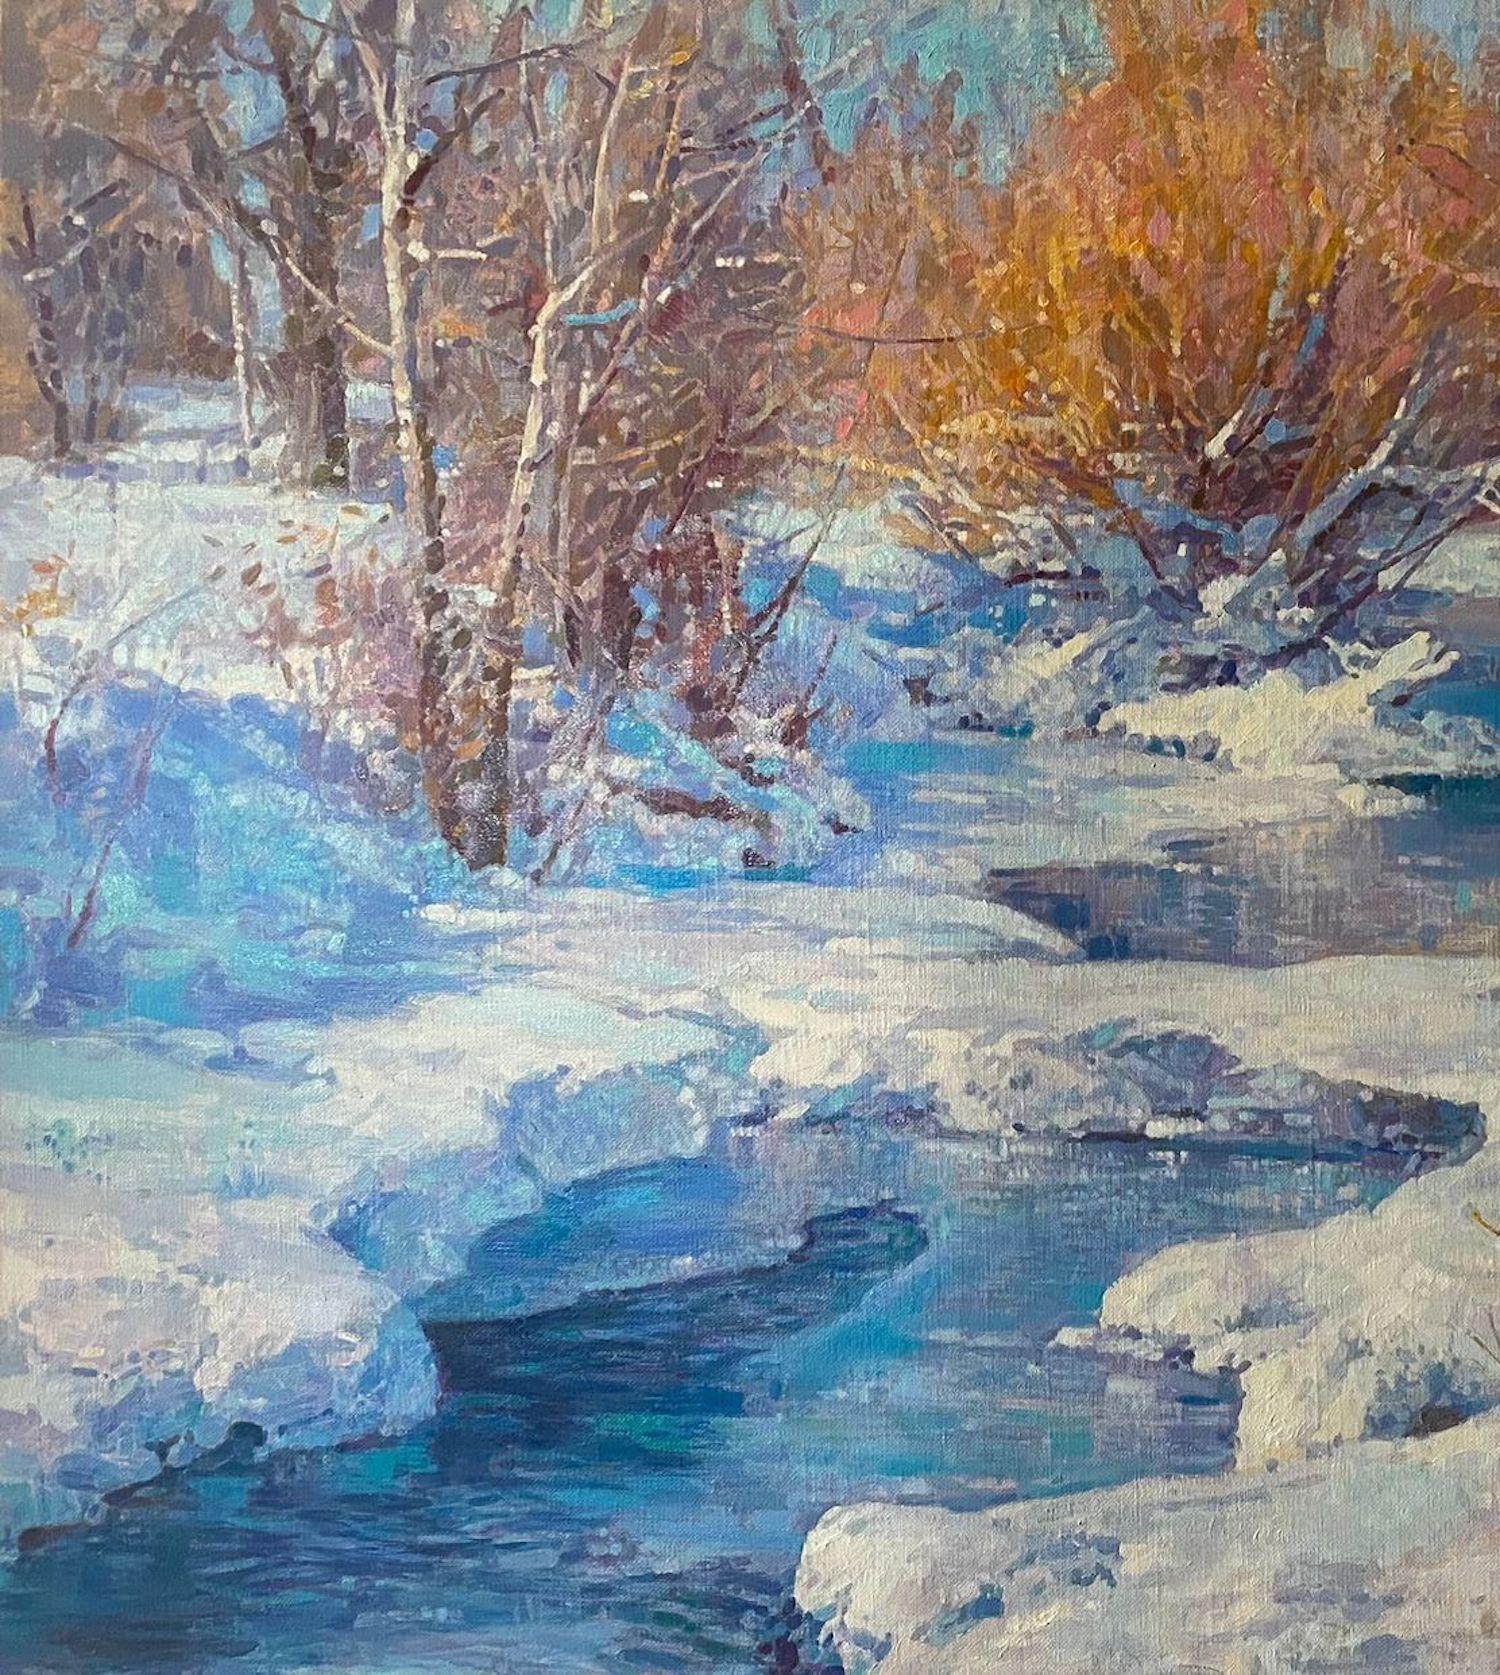 Artist: Ashot Muradyan
Work: Original Painting, Handmade Artwork, One of a Kind 
Medium: Oil on Linen
Year: 2024
Style: Impressionism, 
Subject: Winter Morning,
Size: 23